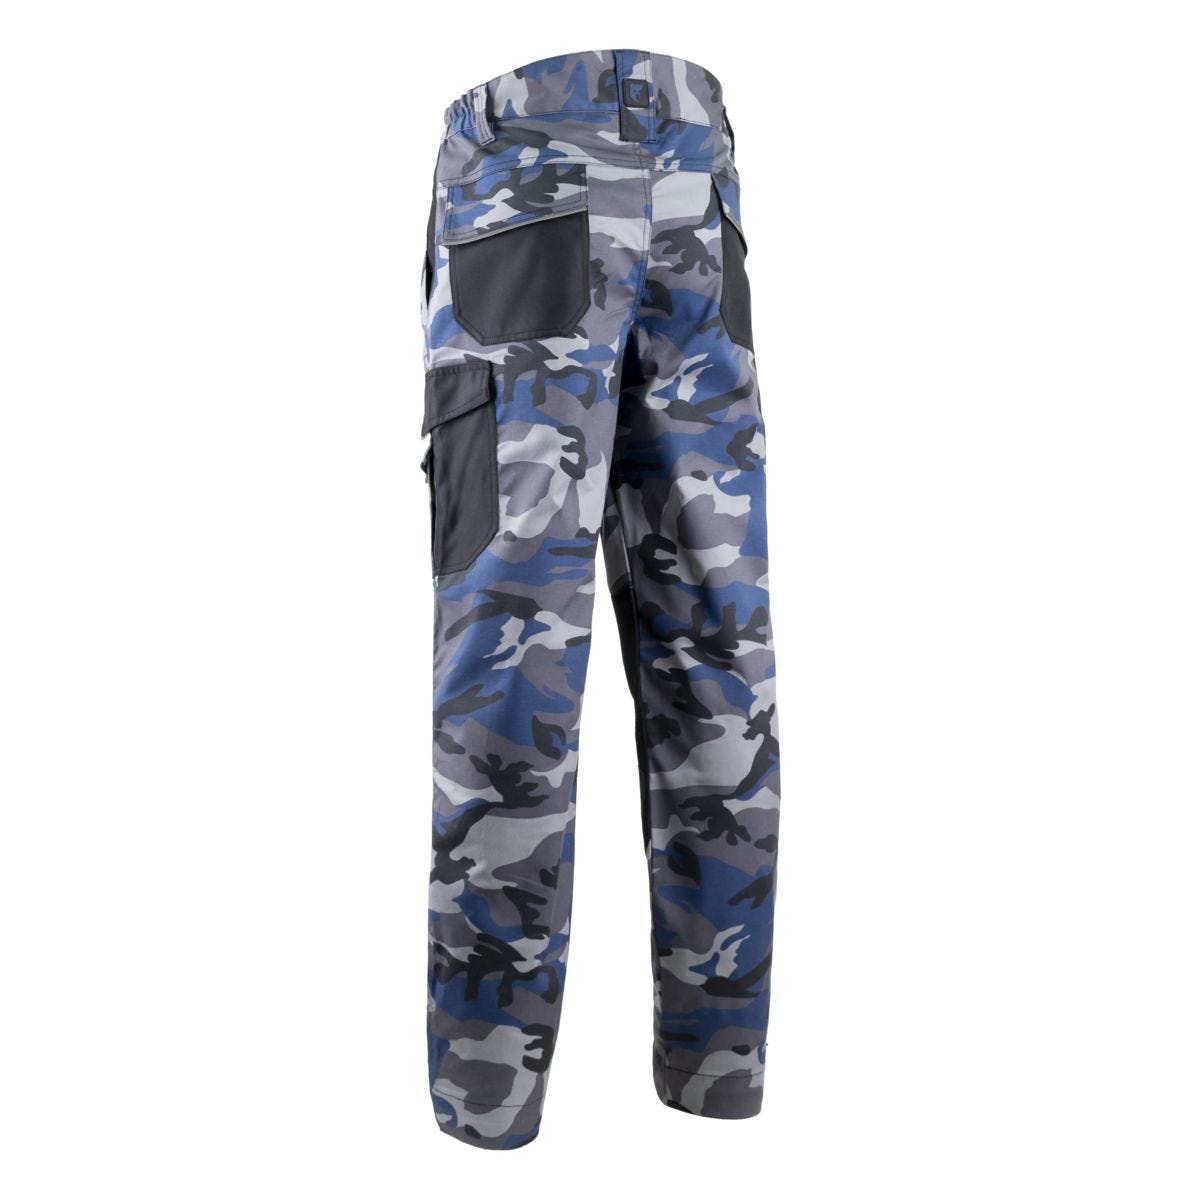 Pantalon KAMMO Camouflage Bleu-Gris - COVERGUARD - Taille L 1